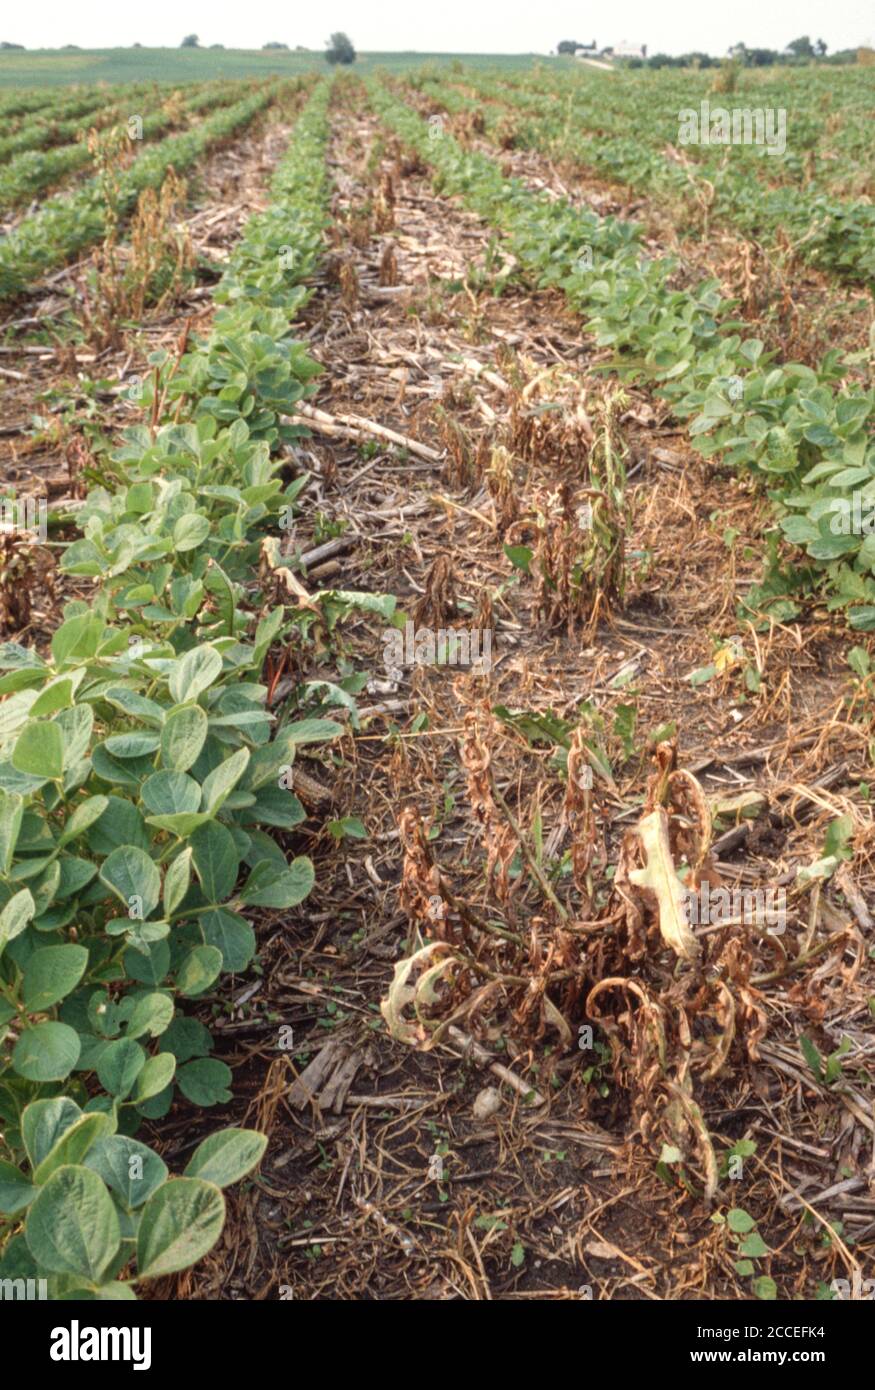 GMO, Genetically-modified organisms, Roundup-Ready Soybeans. Eastern Iowa, near Dyersville, USA. Stock Photo